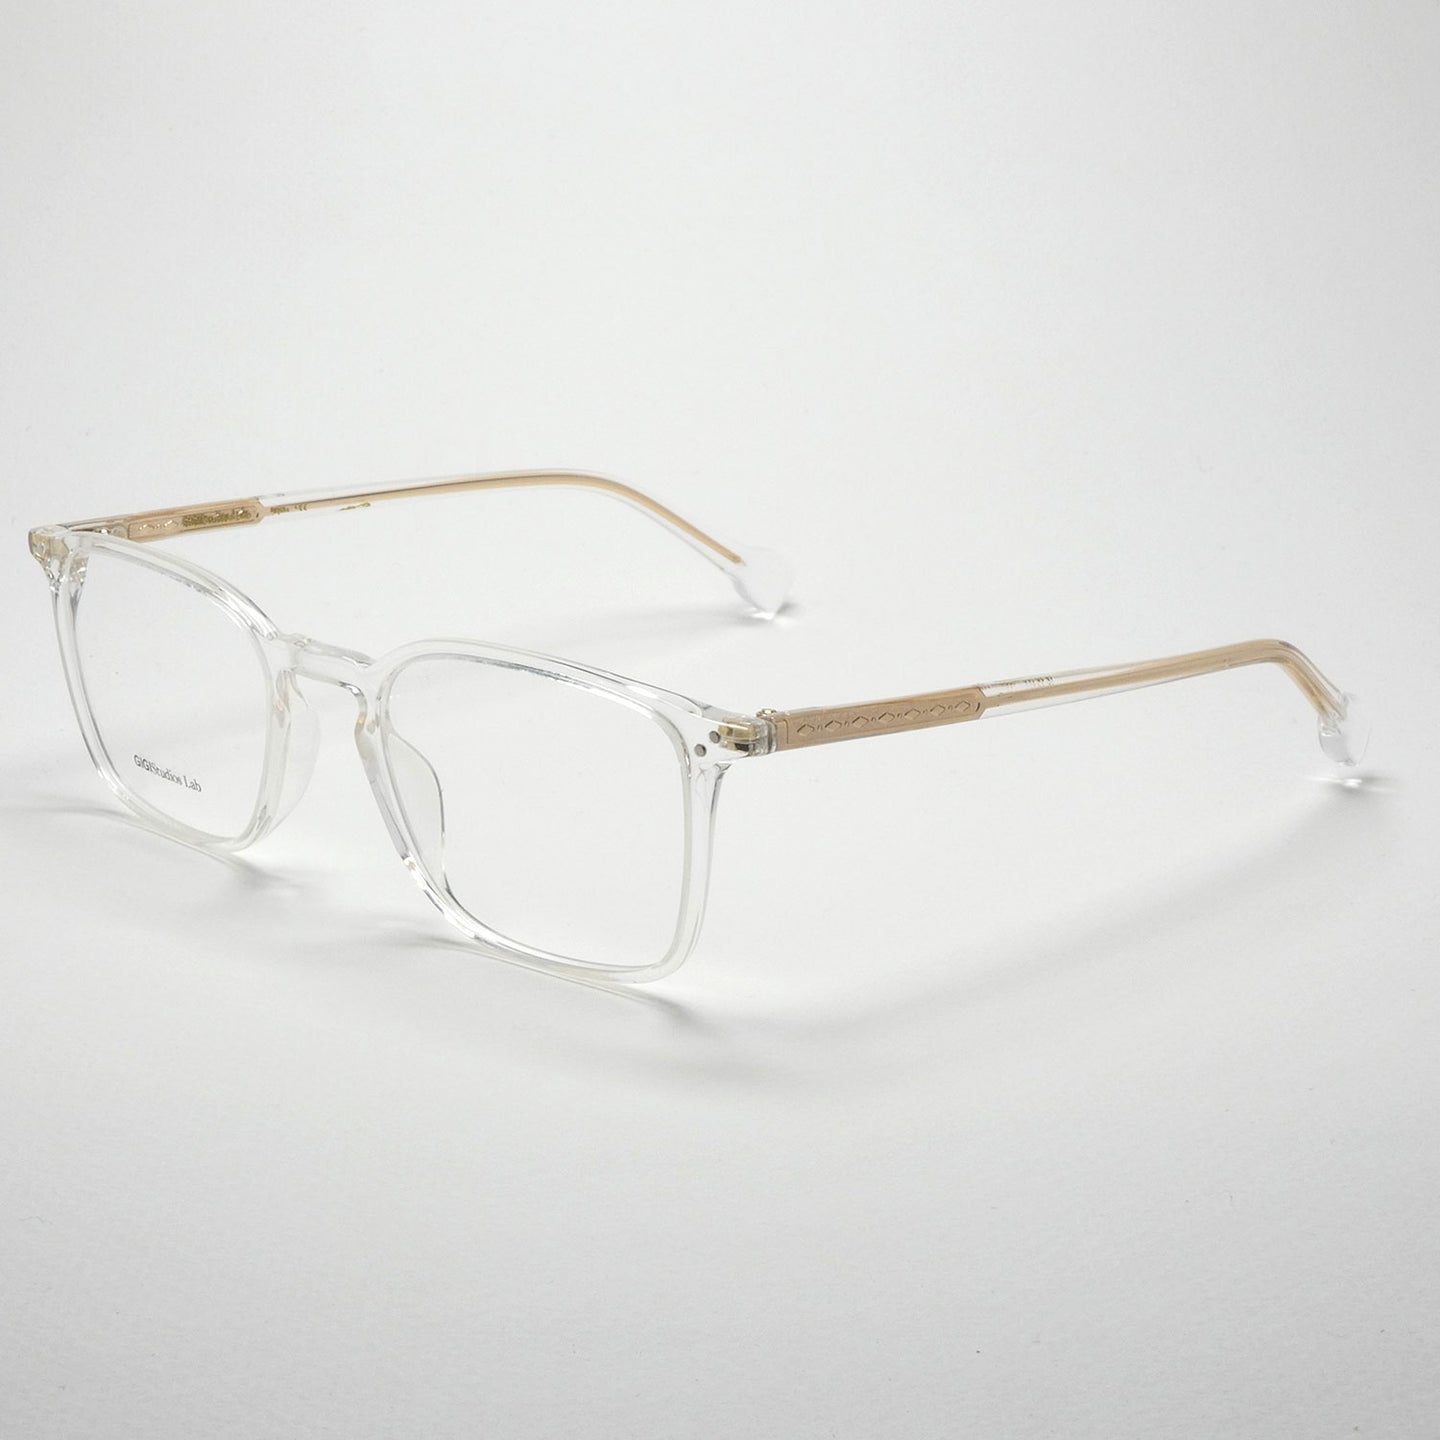 glasses gigistudios 8048 marco color 8 angled view